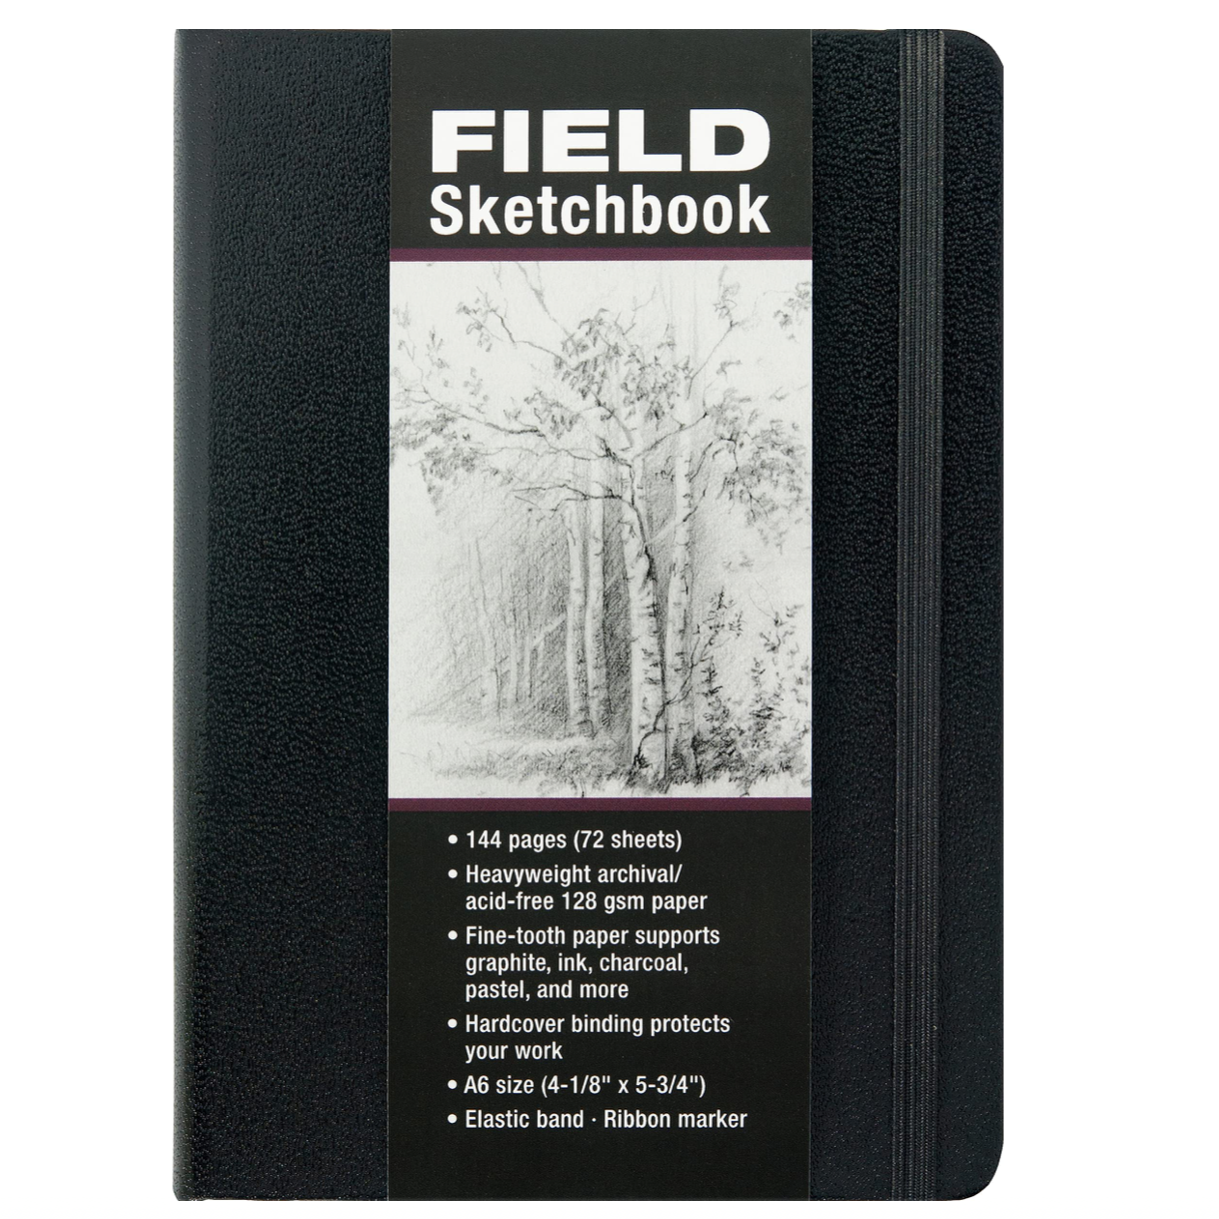 8x10.5 Black Paper Sketchbook